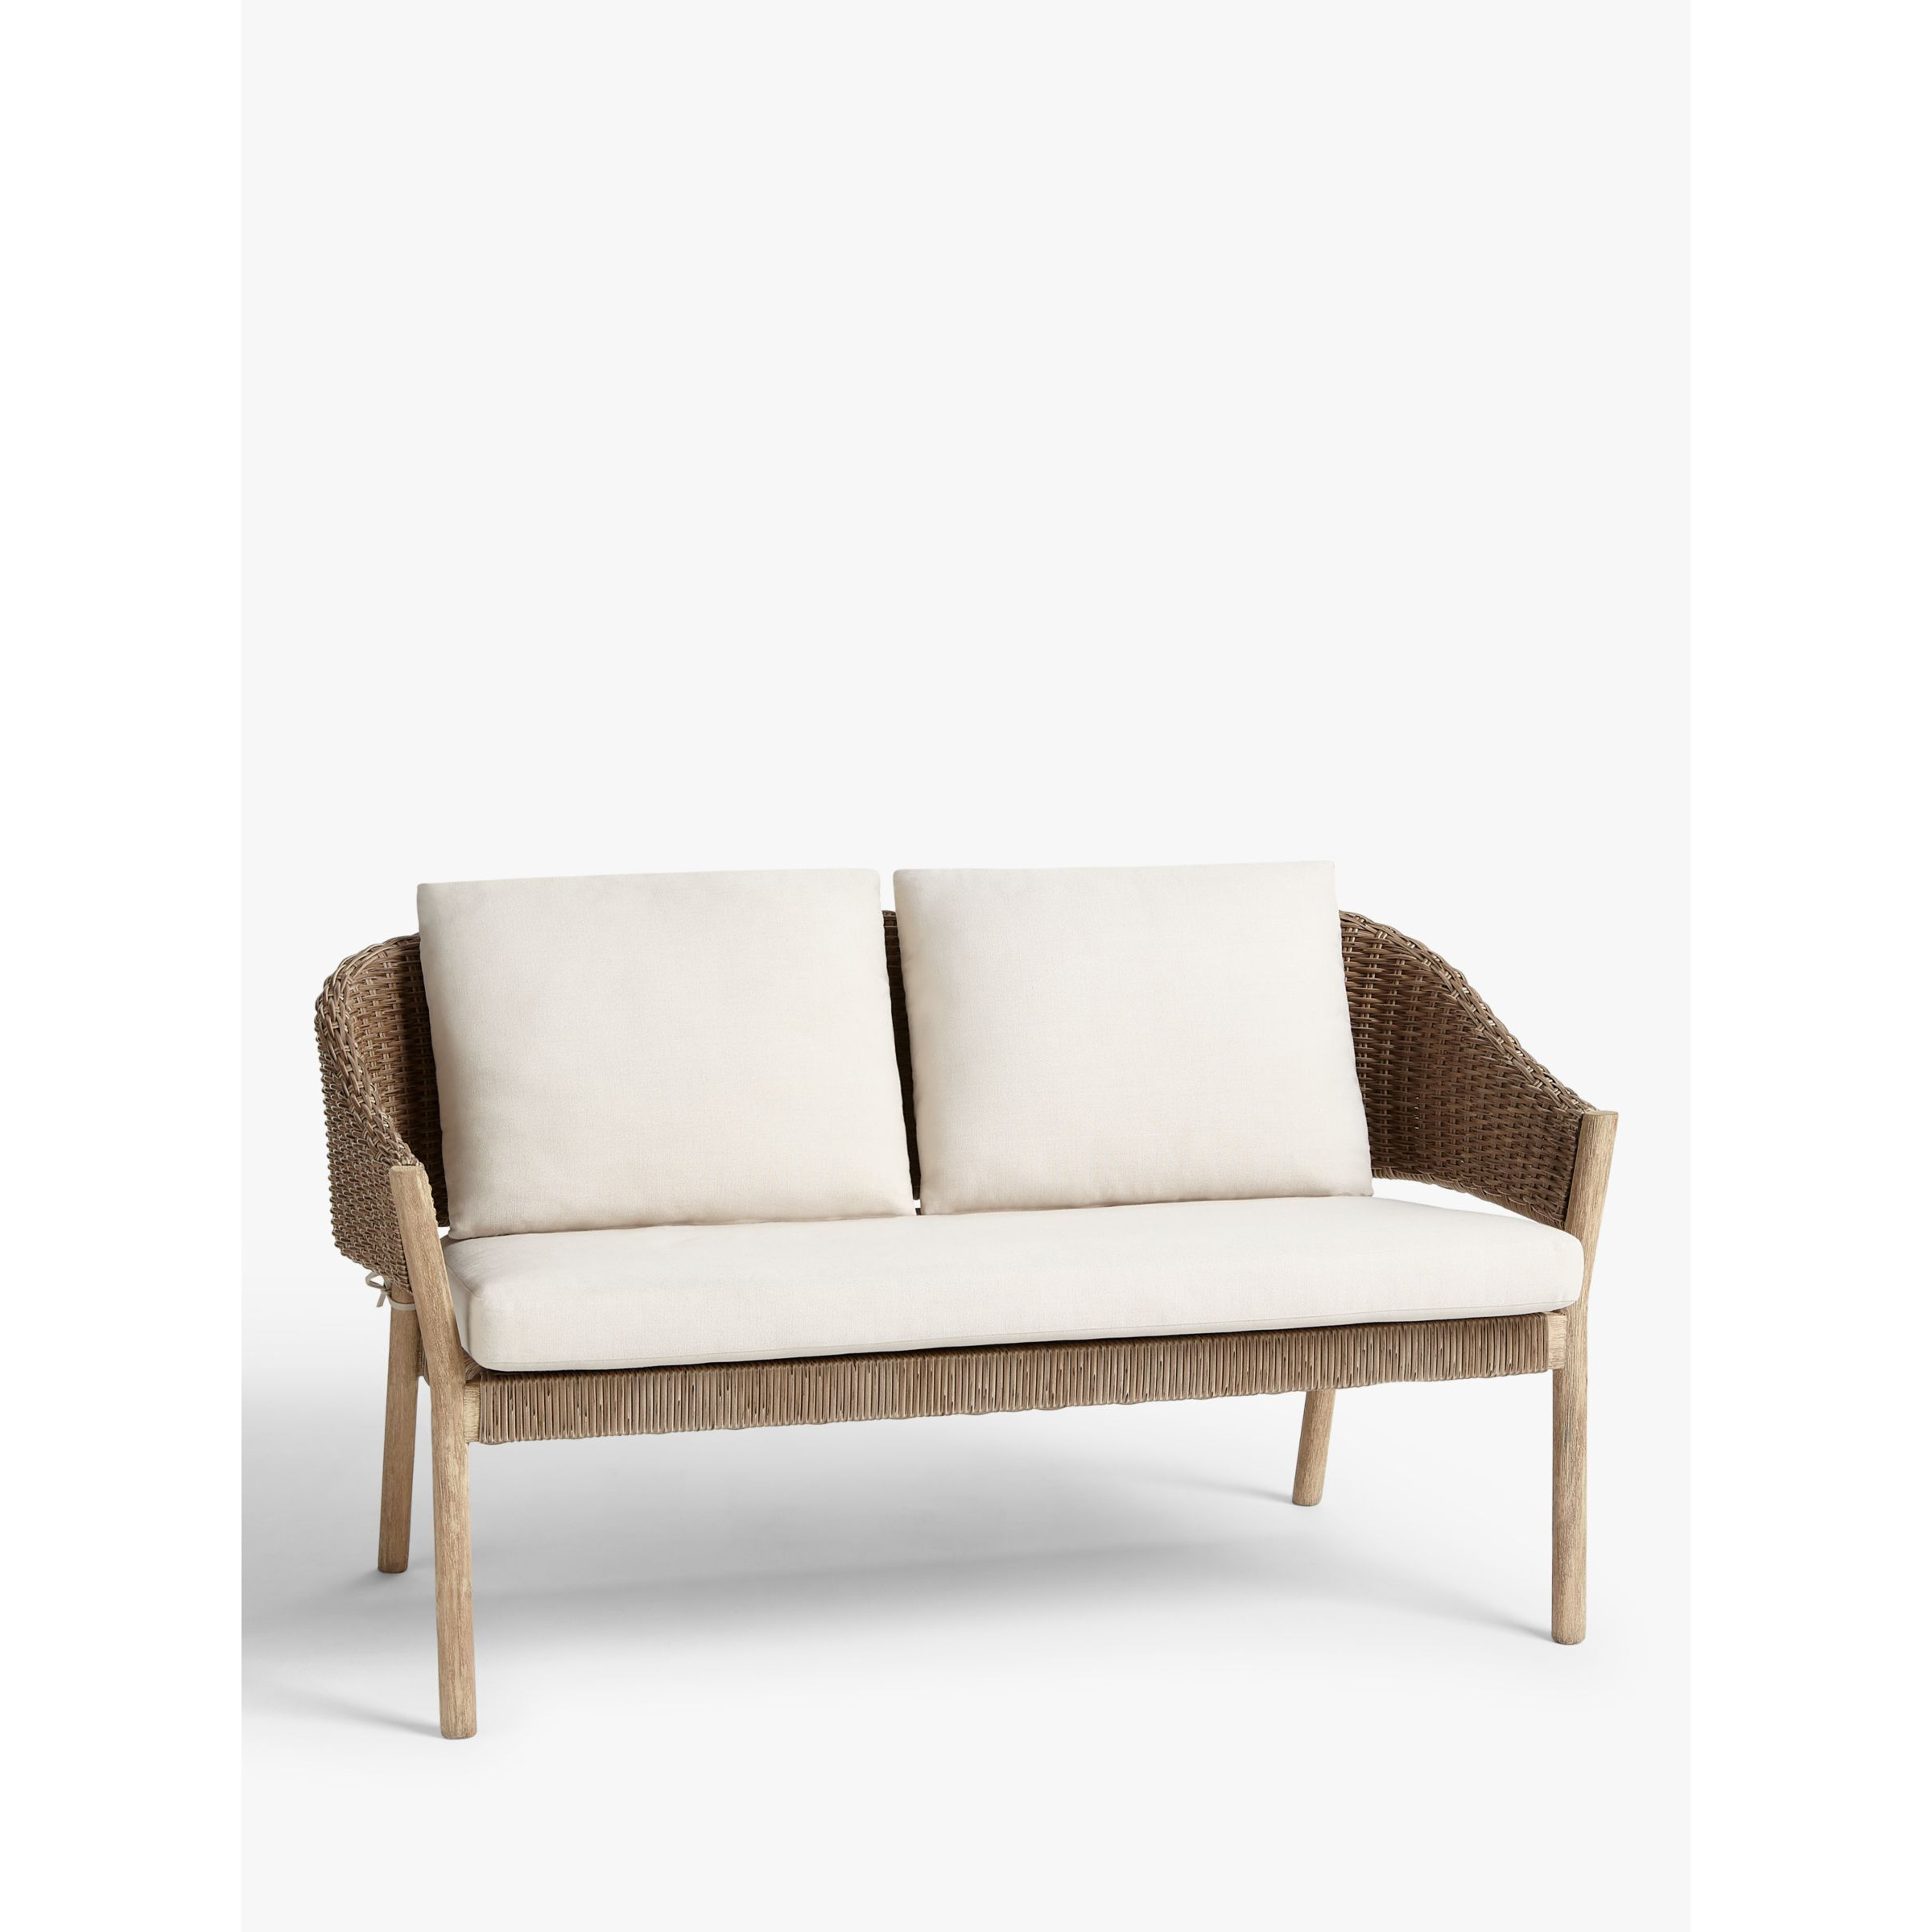 John Lewis Burford 2-Seat Woven Garden Sofa, FSC-Certified (Acacia Wood), Natural - image 1